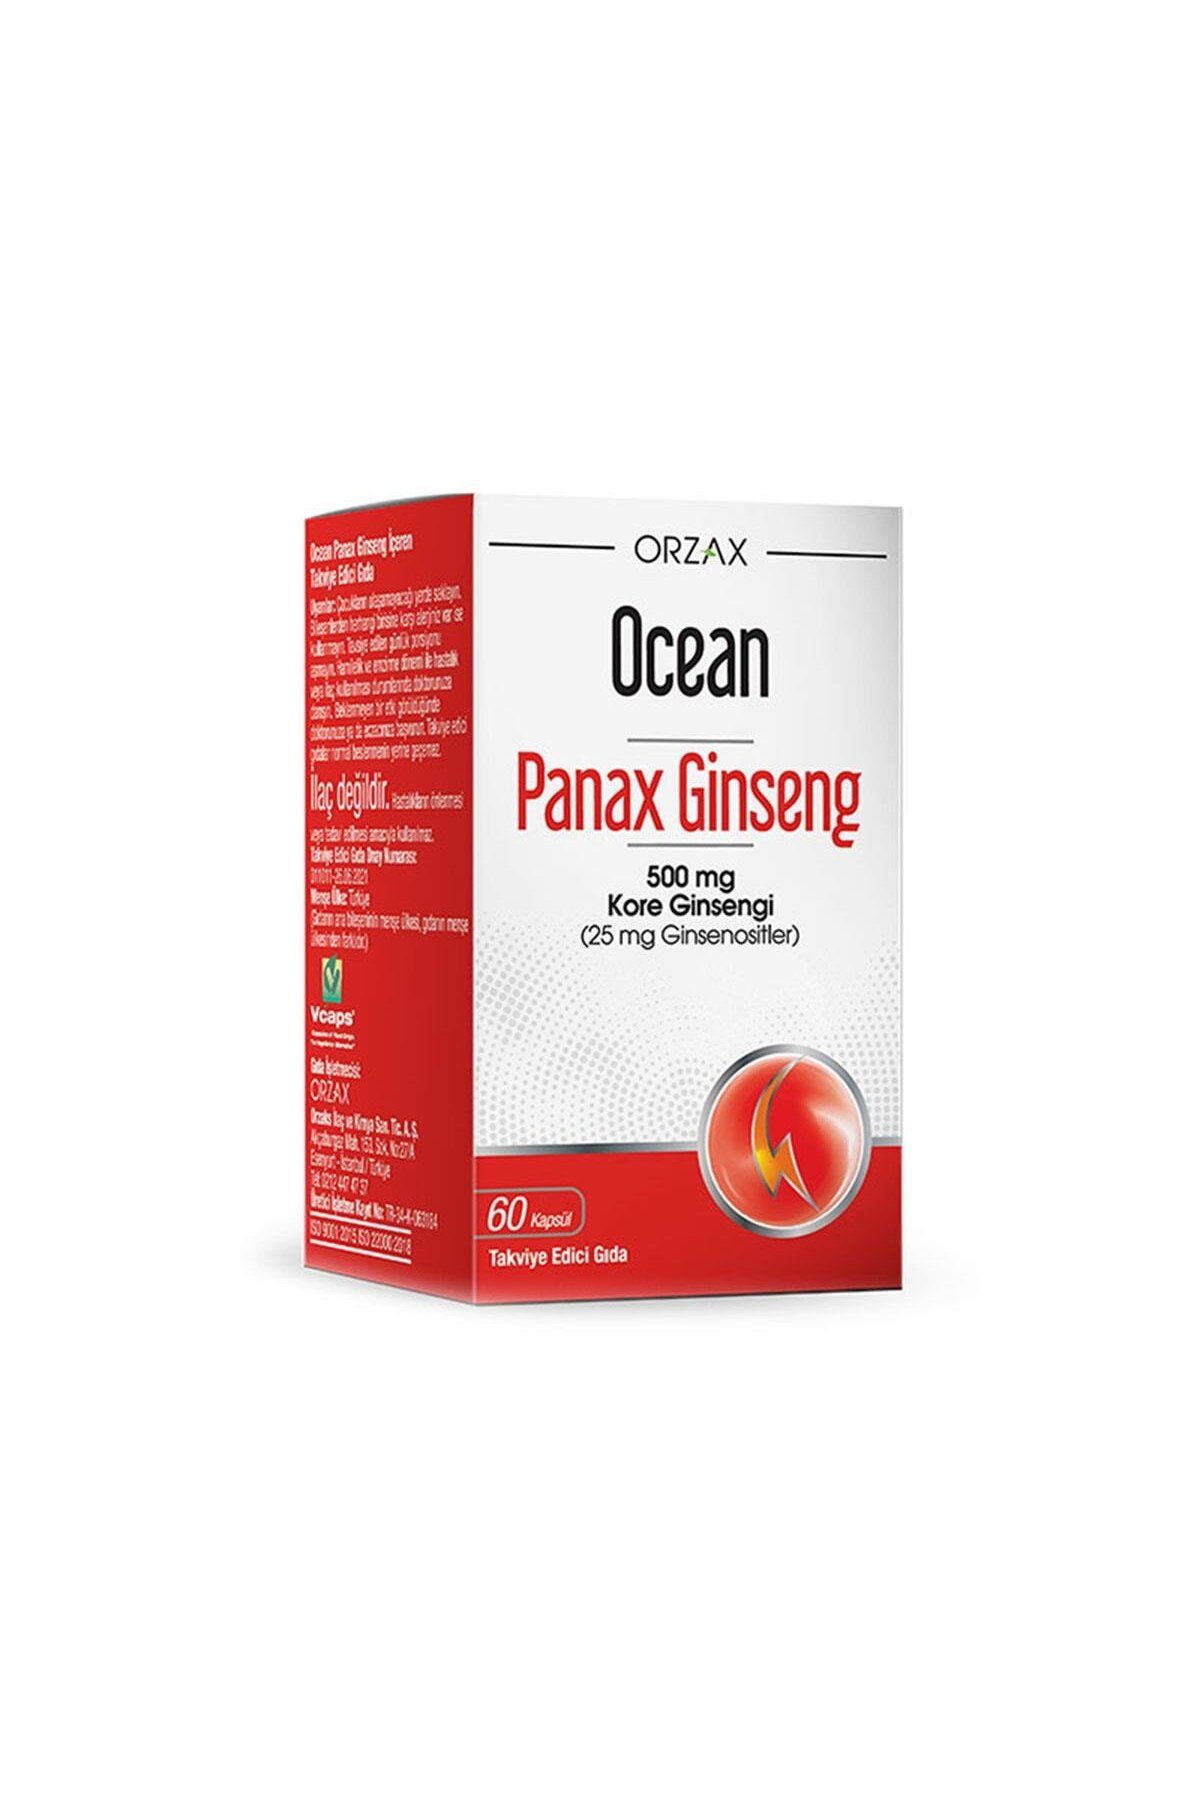 Ocean Panax Ginseng 500mg 60 Kapsül Kore Ginsengi İçeren Takviye Edici Gıda + Facial Cleanser 100ml Hediye